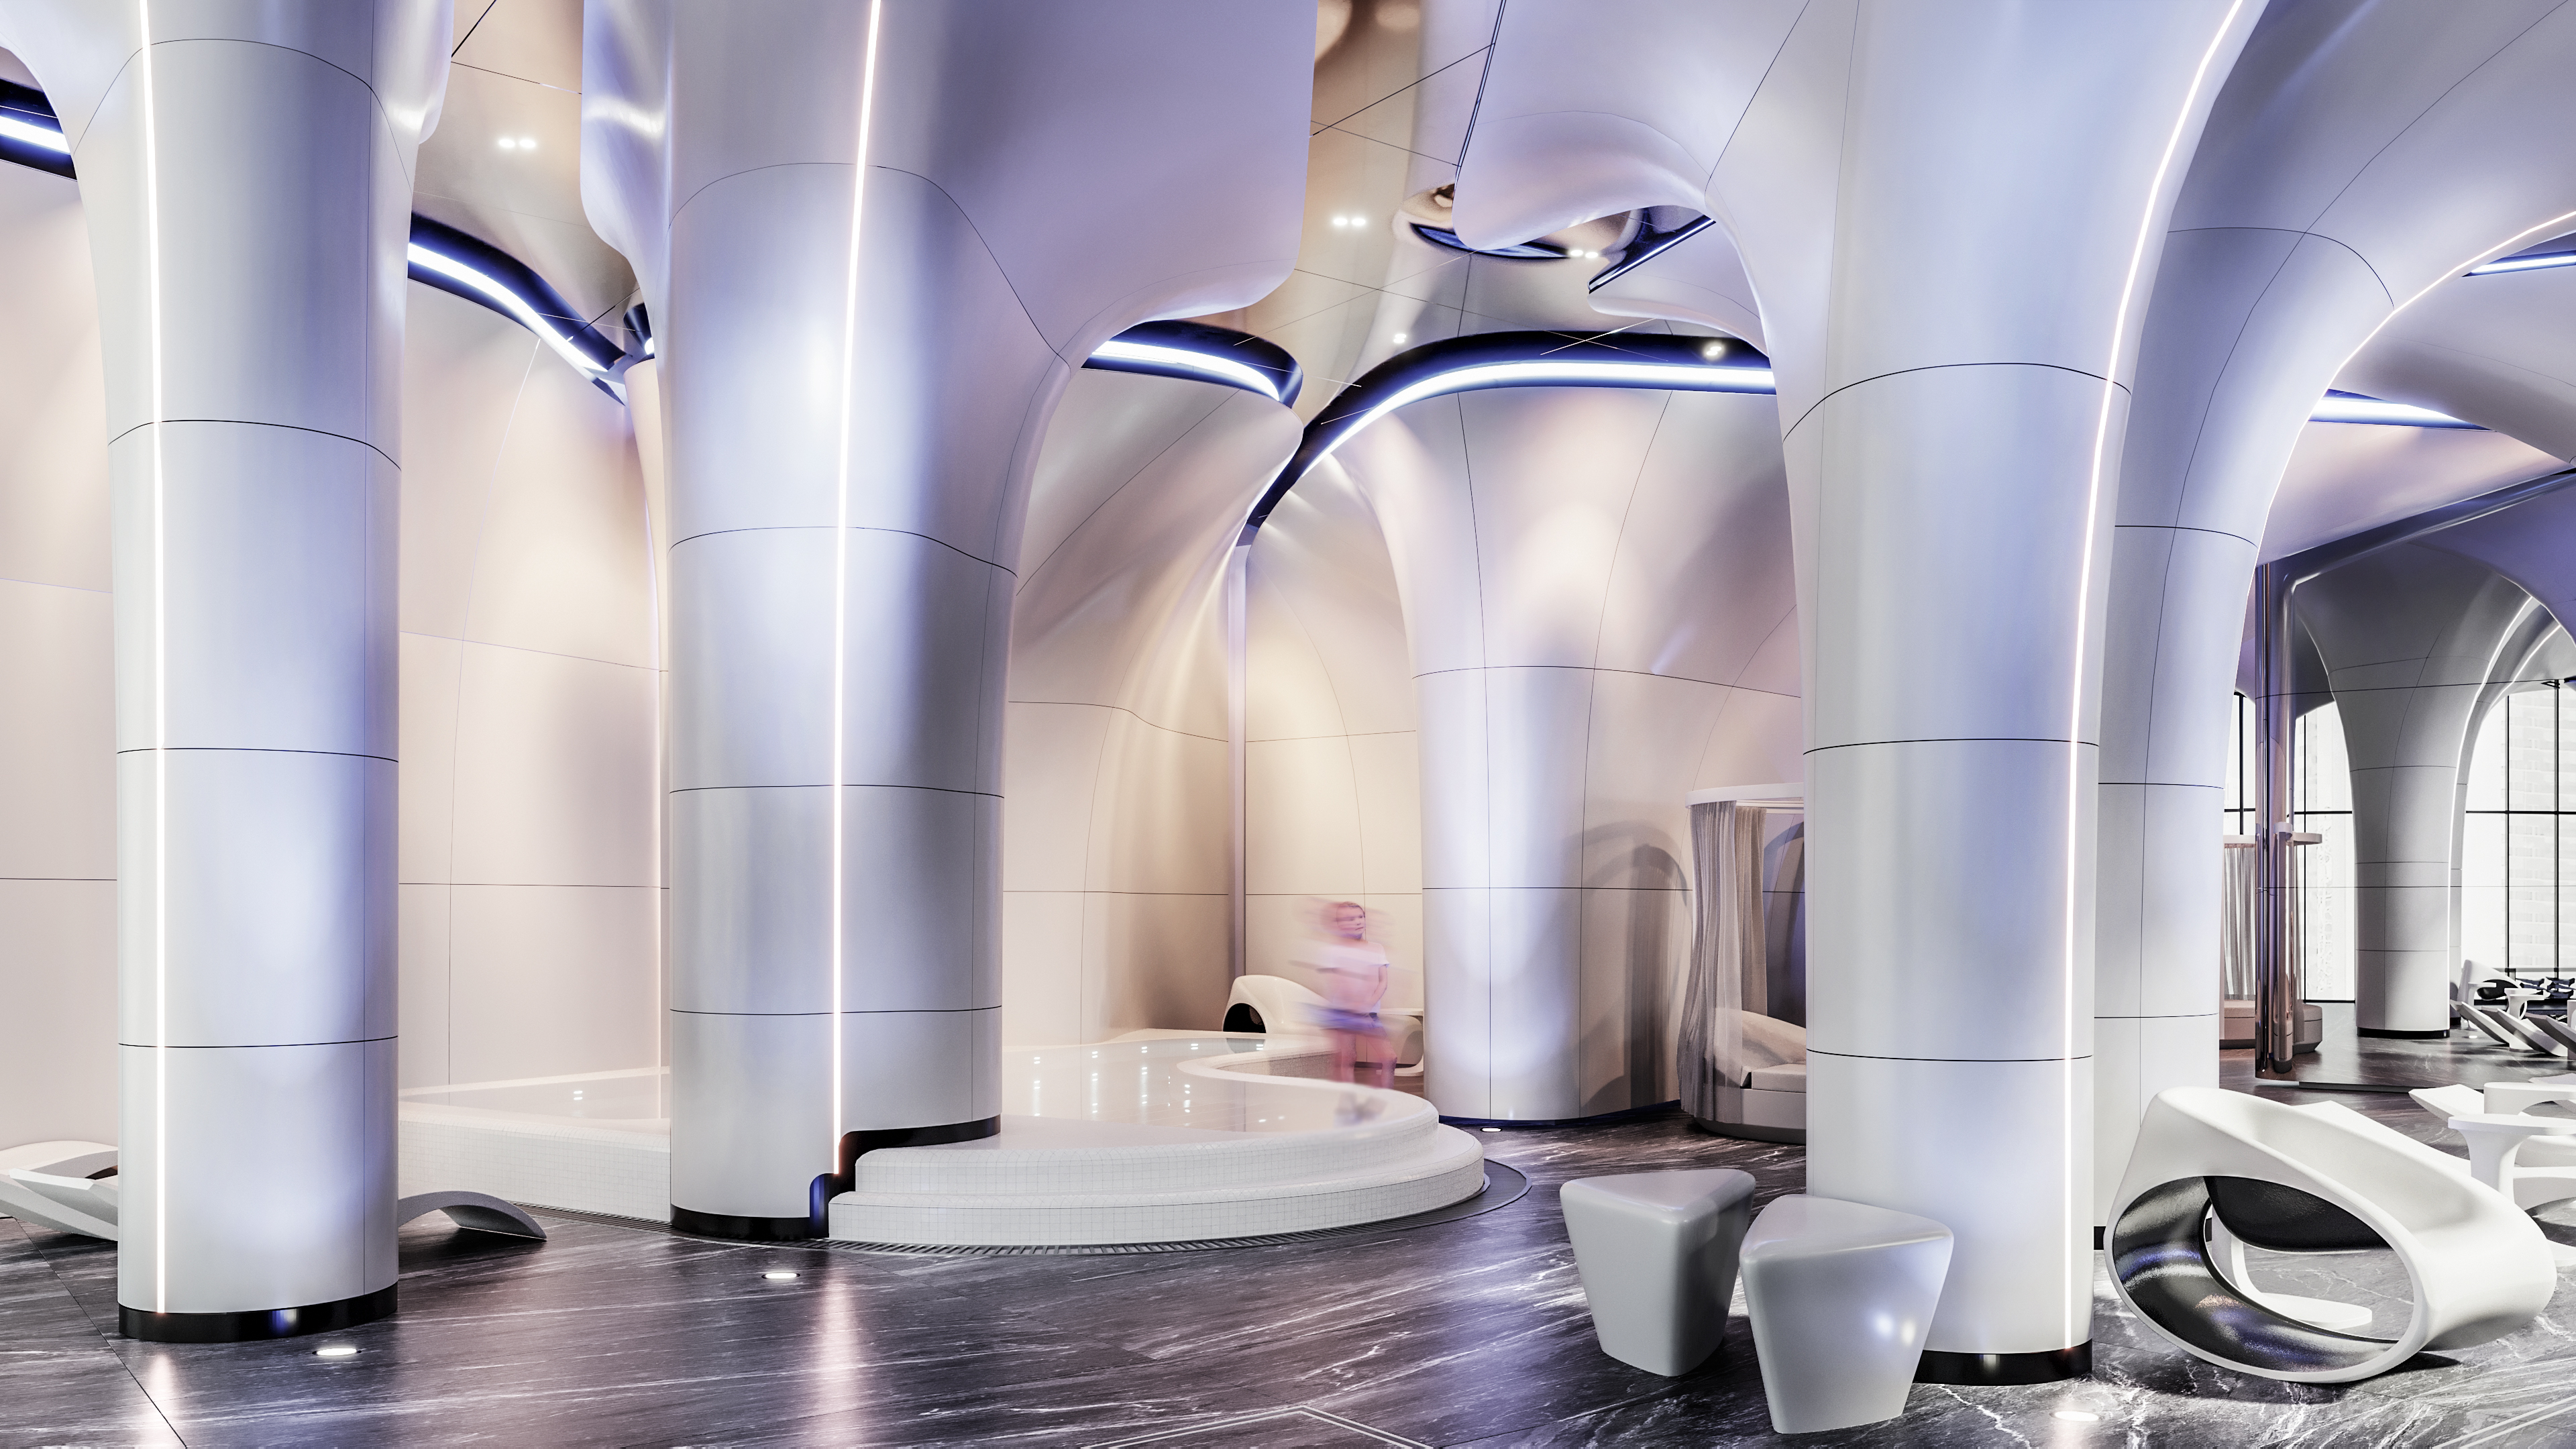 Futuristic Spa Design: Project Locus 1